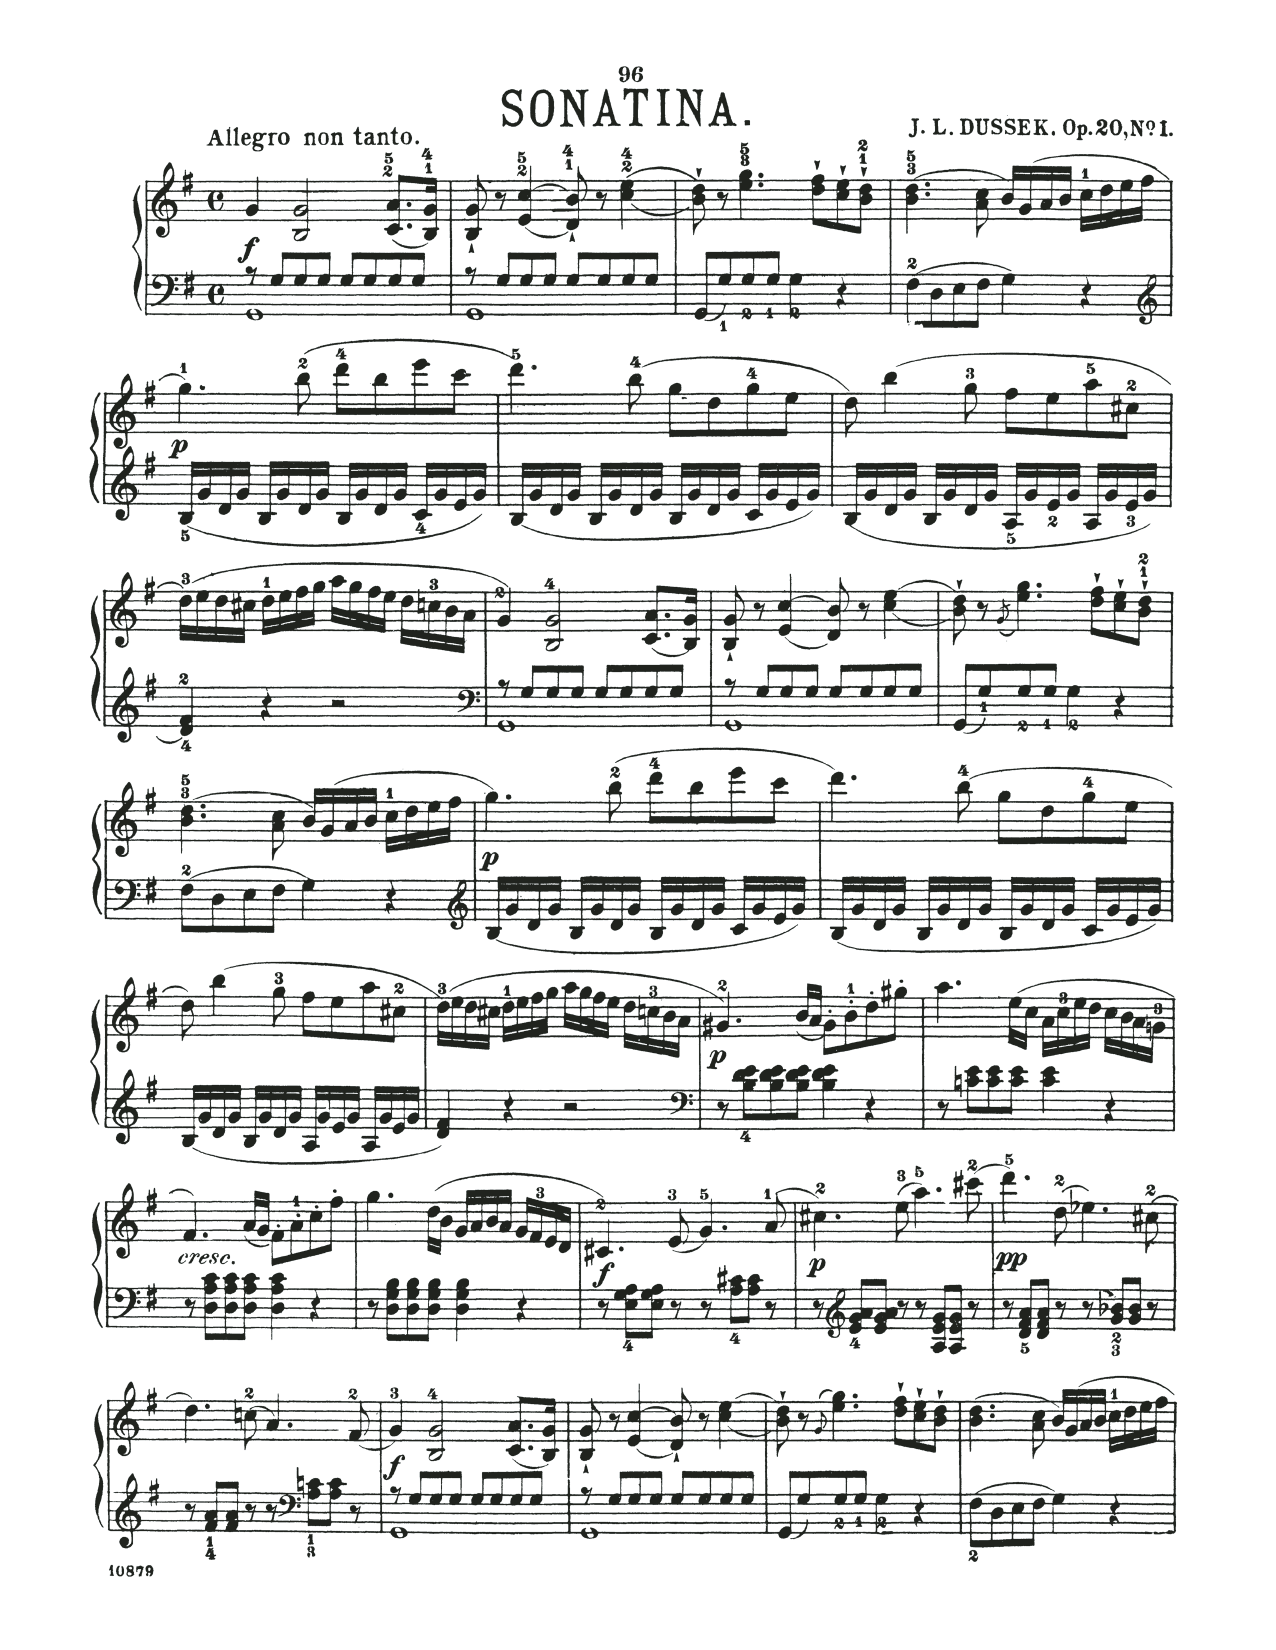 Download Jan Ladislaw Dussek Sonatina In G Major, Op. 20, No. 1 Sheet Music